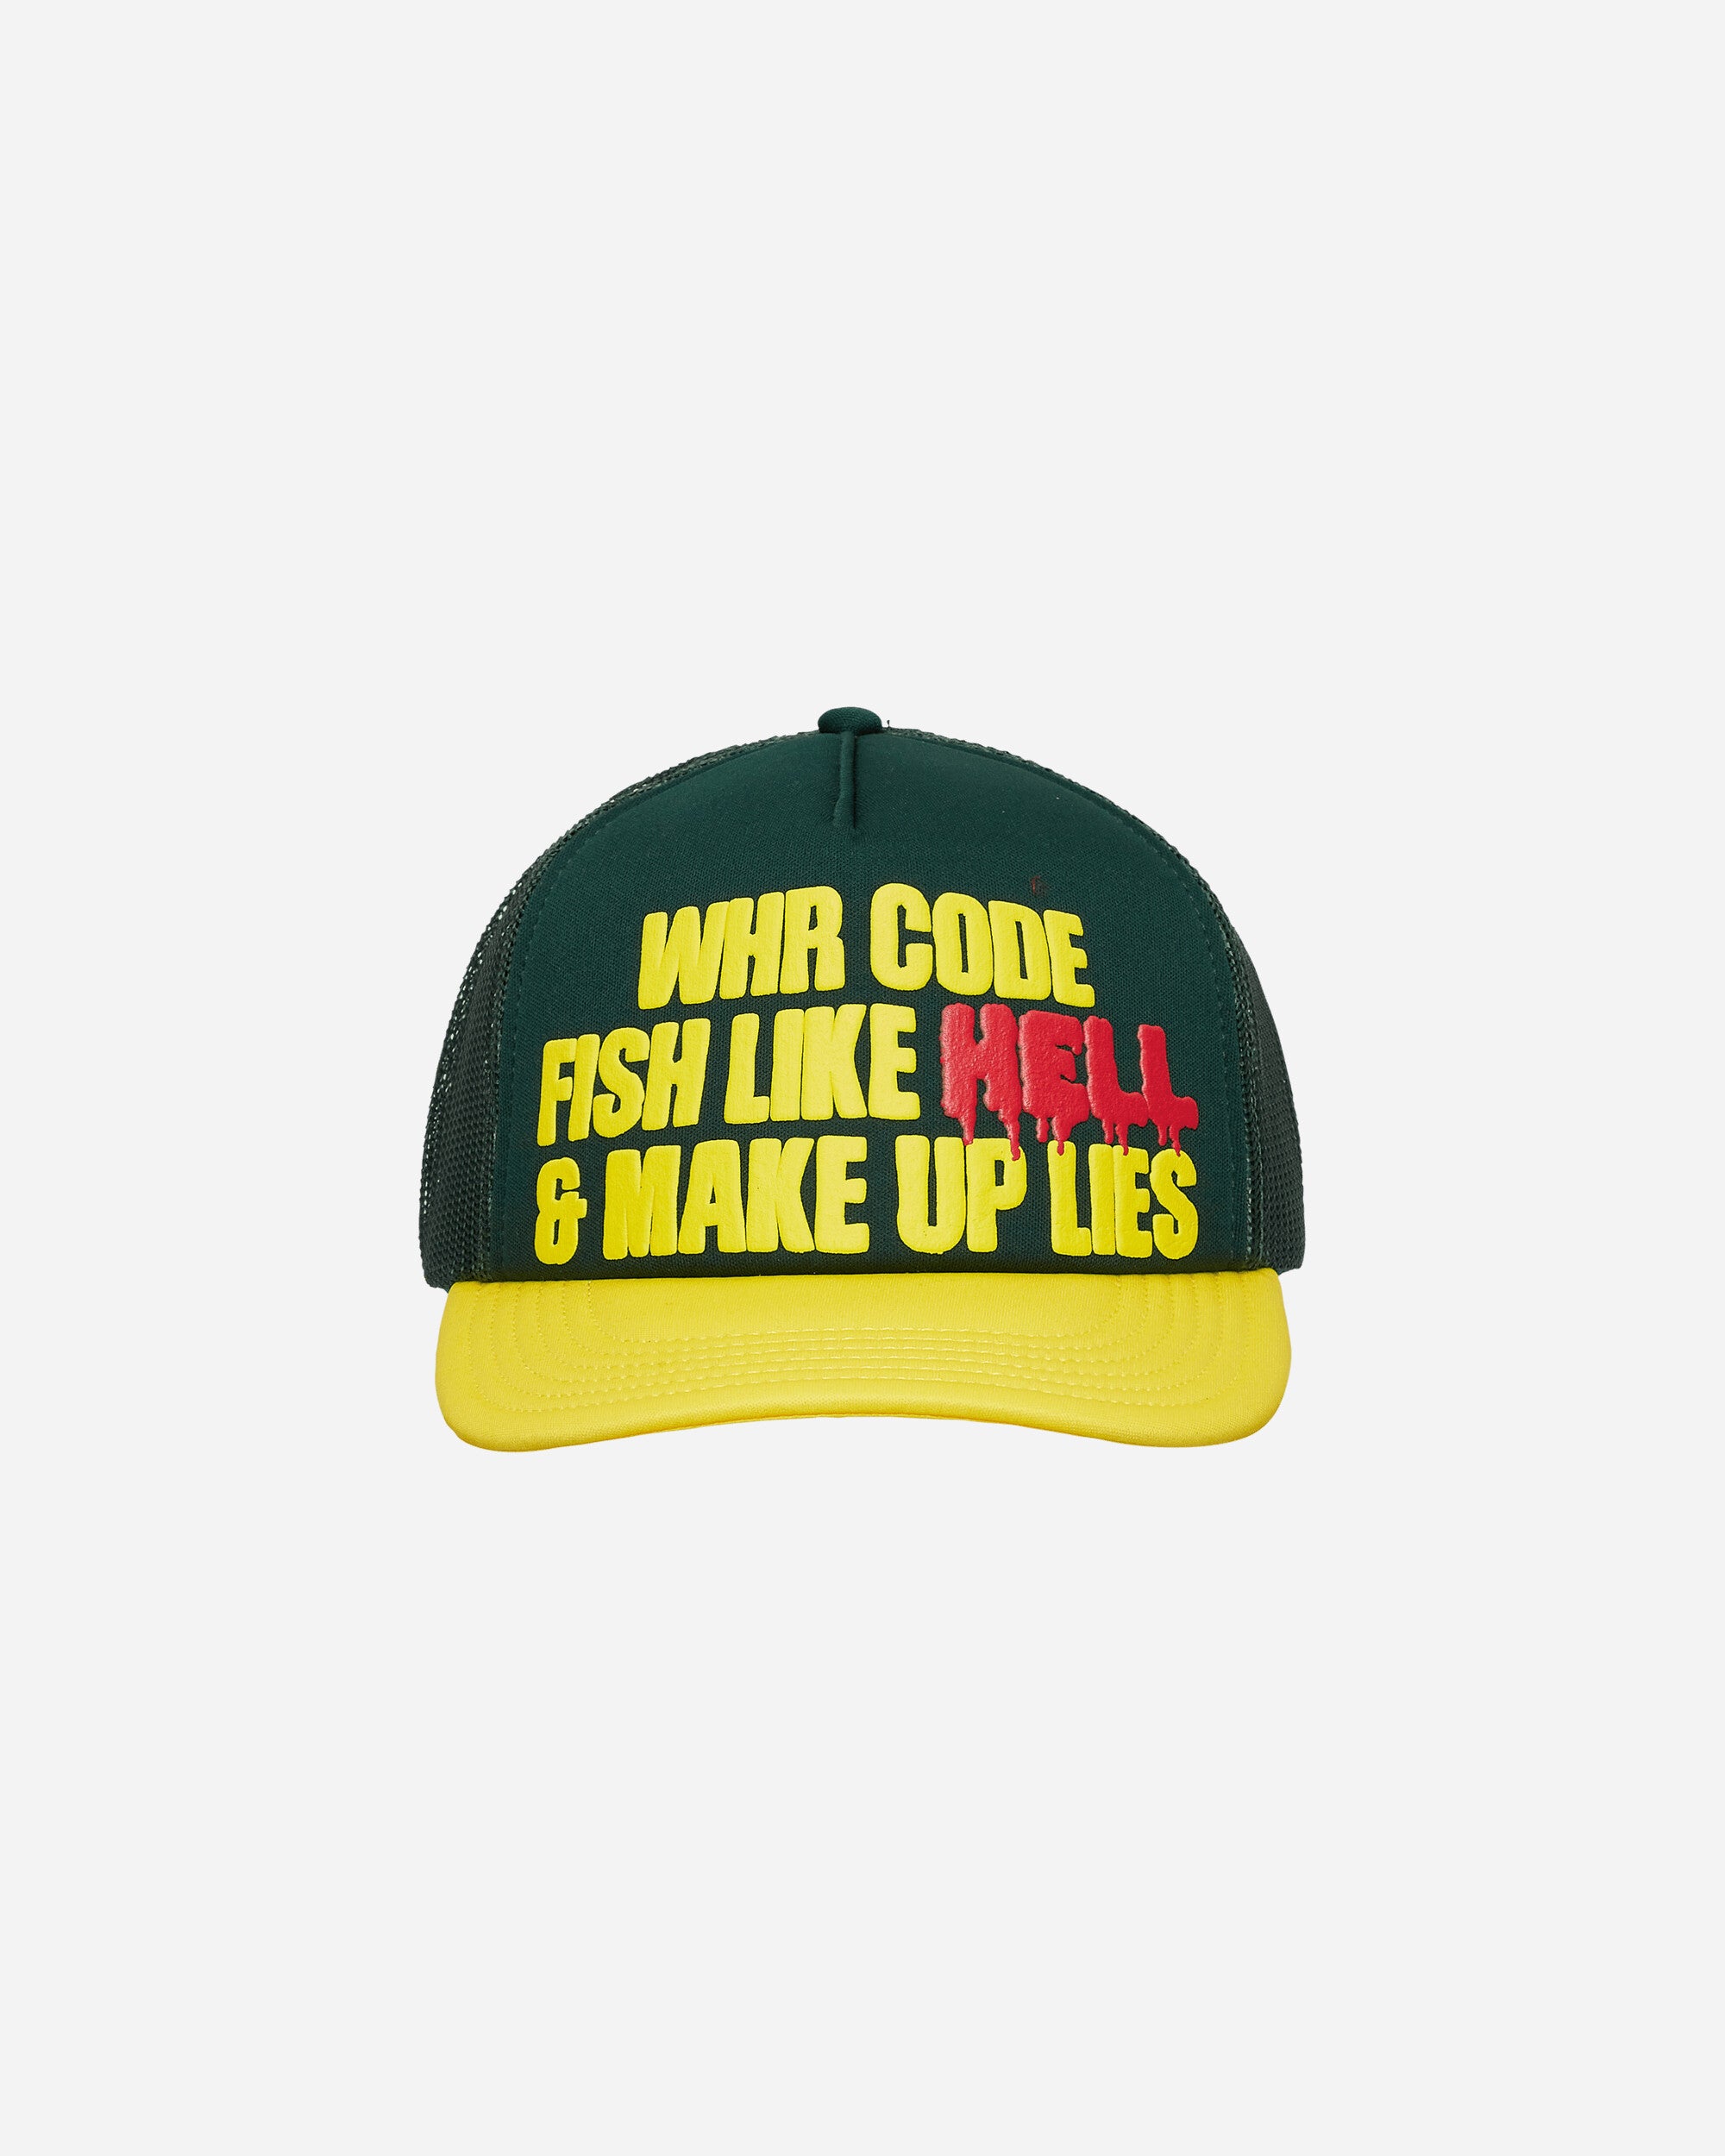 WESTERN HYDRODYNAMIC RESEARCH Fishing Hat Green/Yellow Hats Caps MWHR24SPSU4005 GREENYELLOW